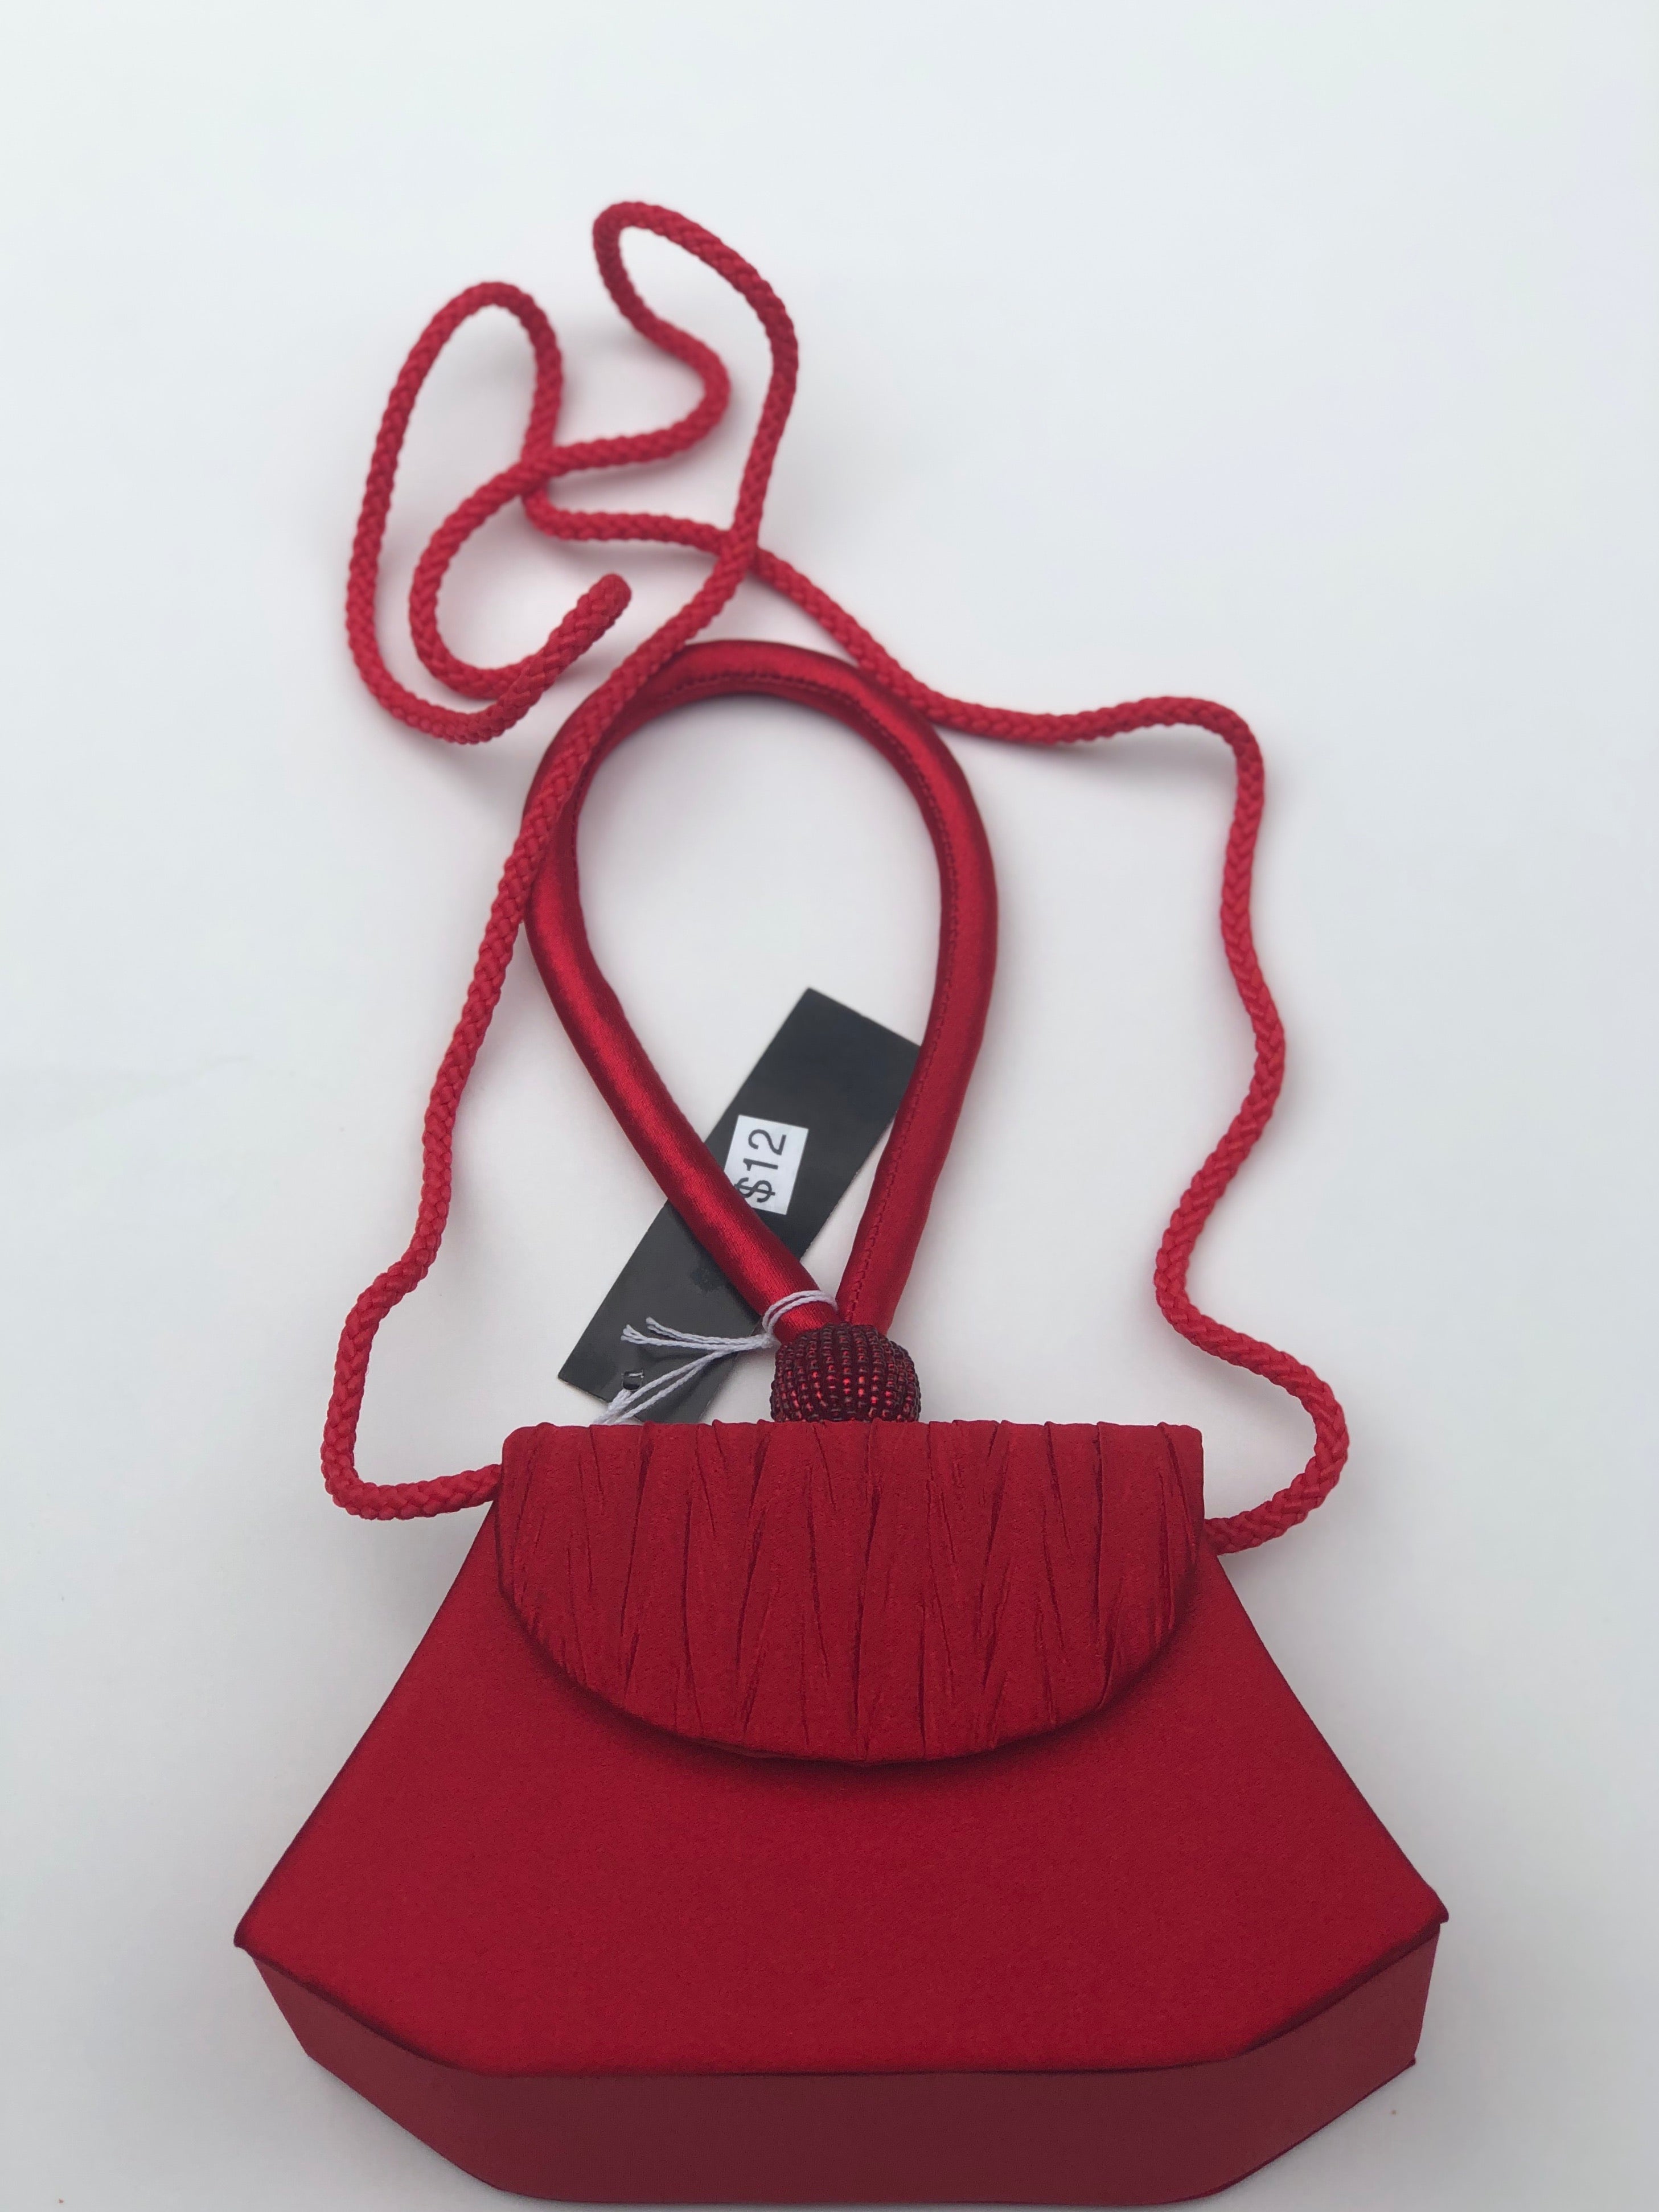 Moni Couture Mini Handbag Red